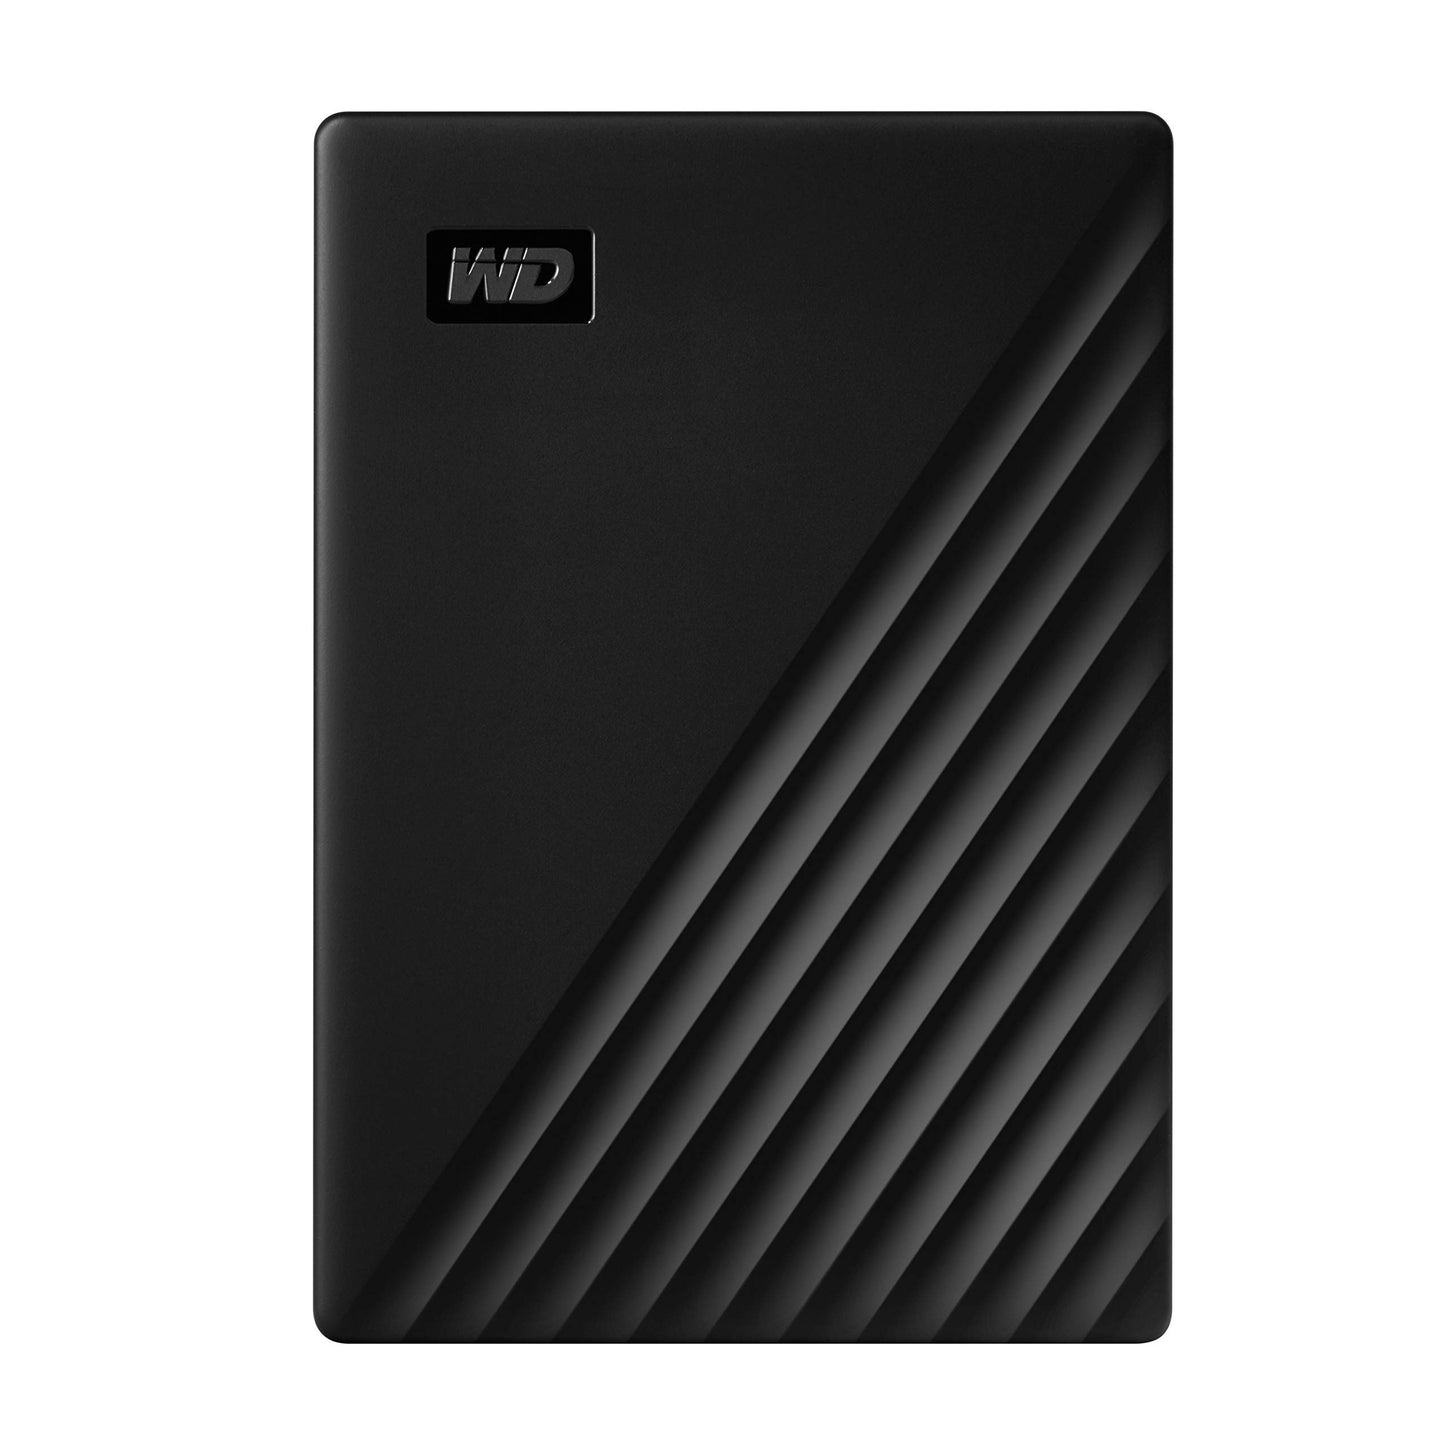 WD 4TB My Passport Portable External Hard Drive, Red - WDBPKJ0040BRD-WESN